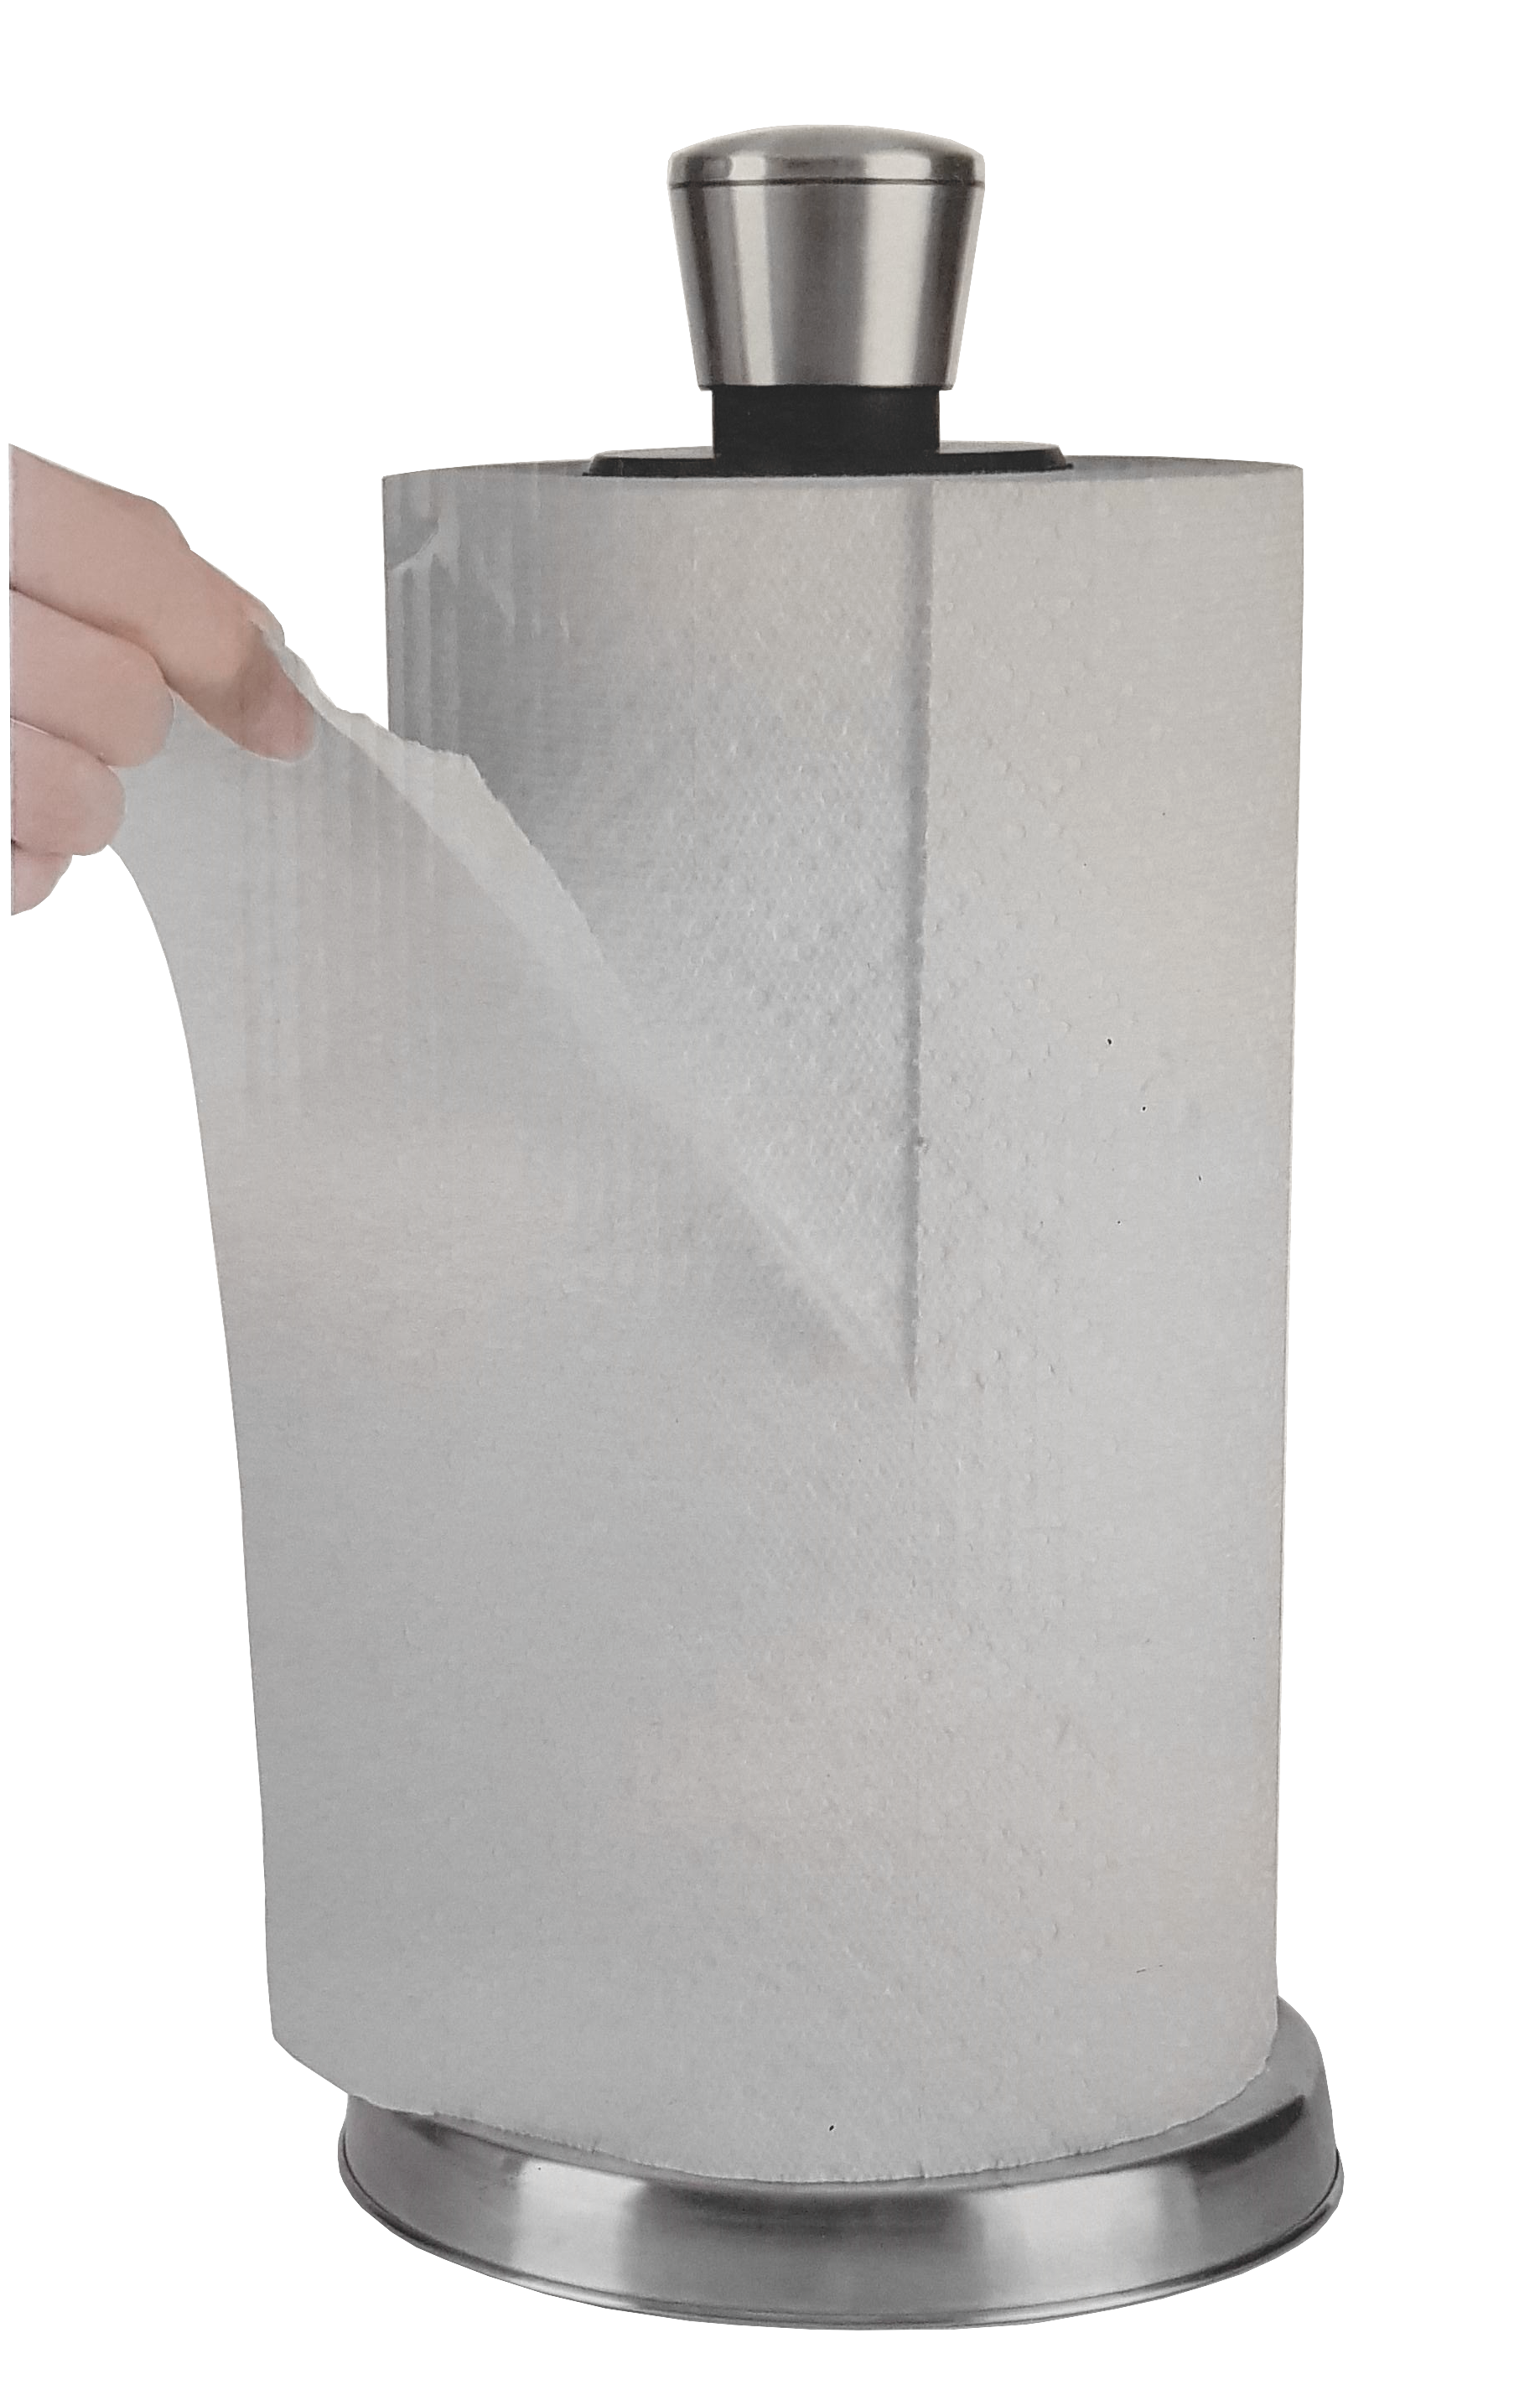 Vertical paper towel holder, stainless steel